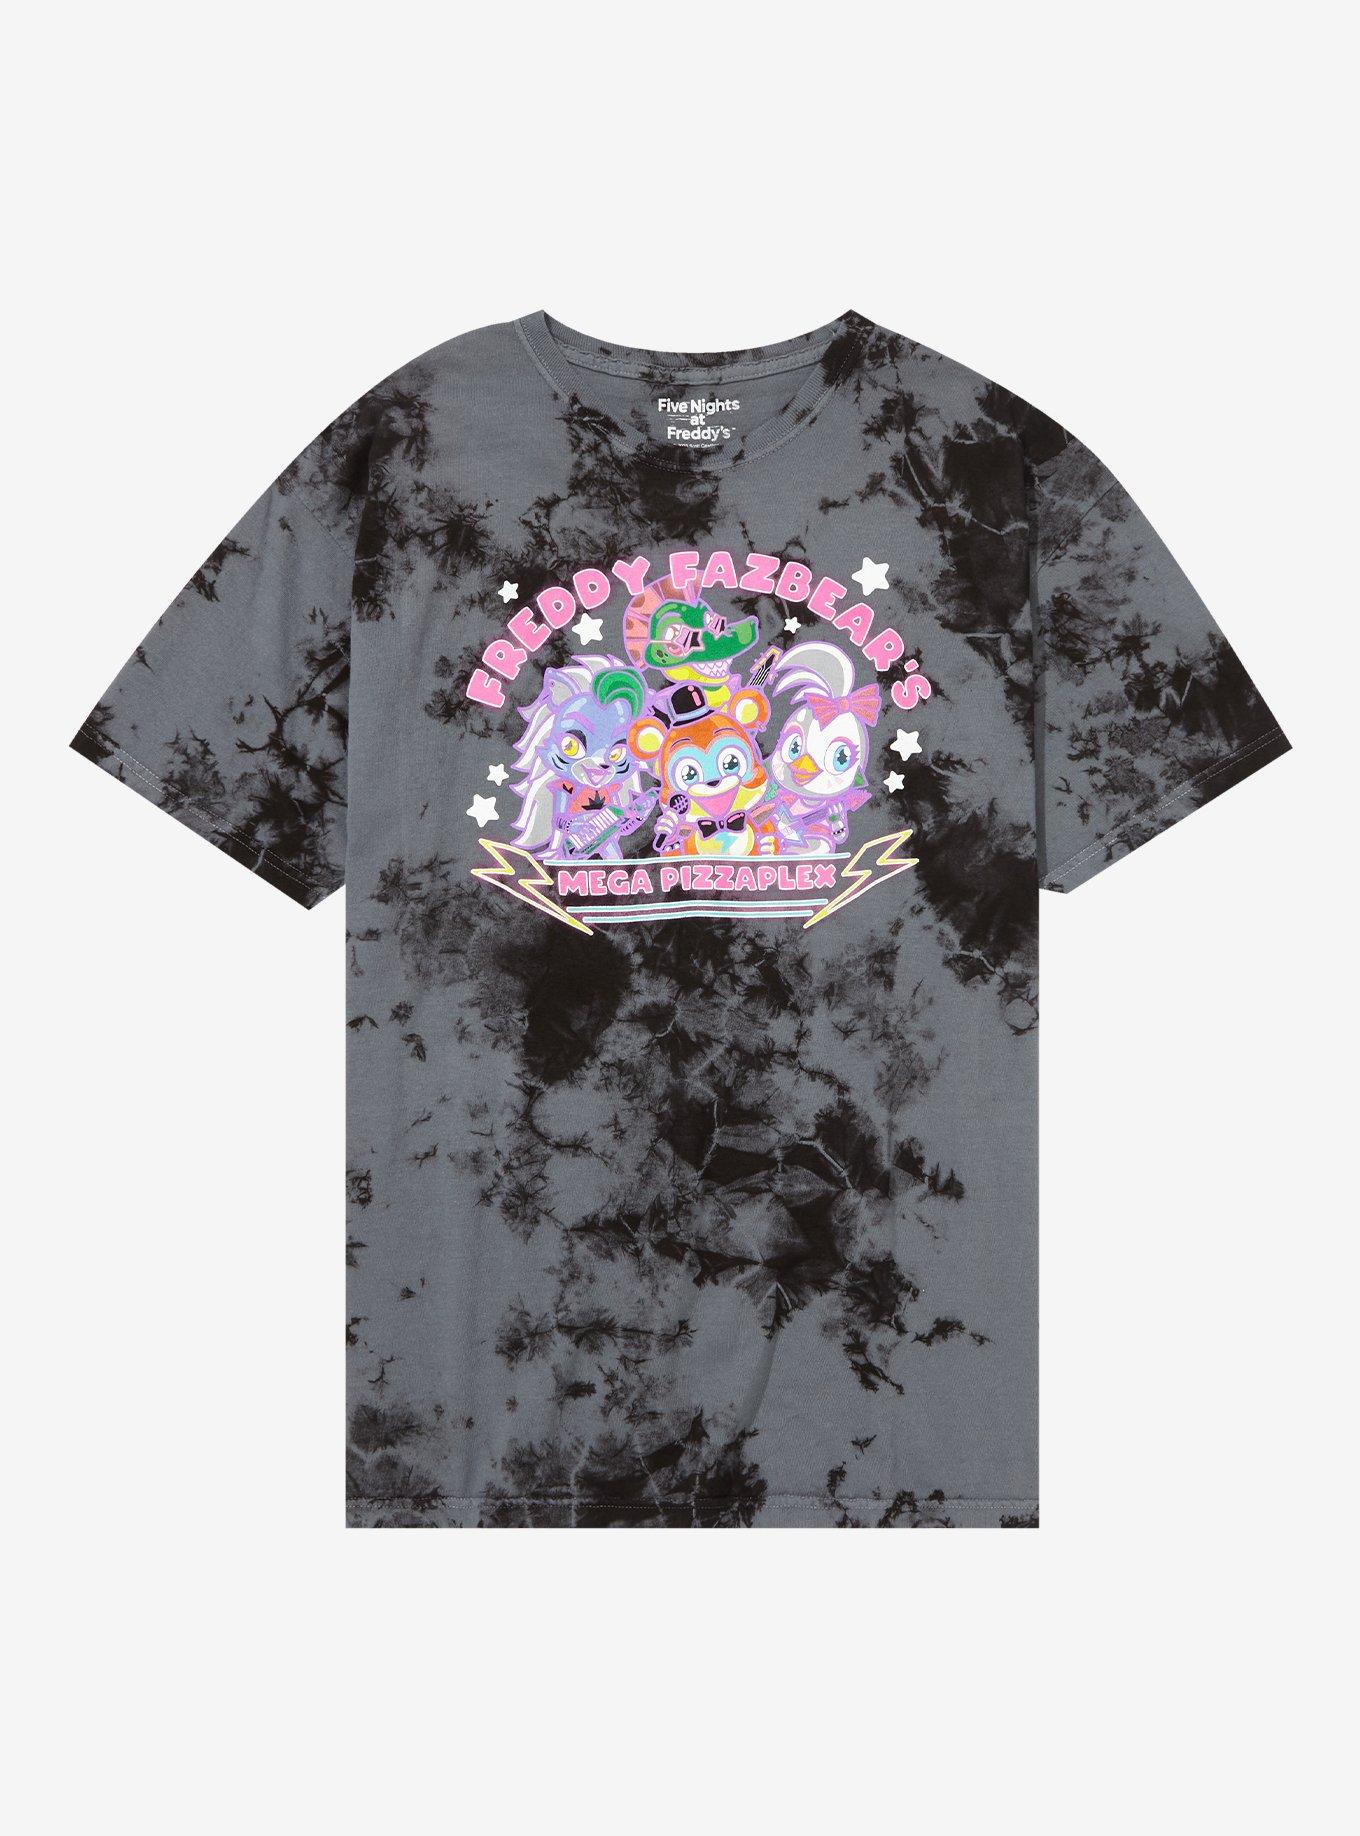 Teenage Mutant Ninja Turtles Chibi Kids T-Shirt for Sale by